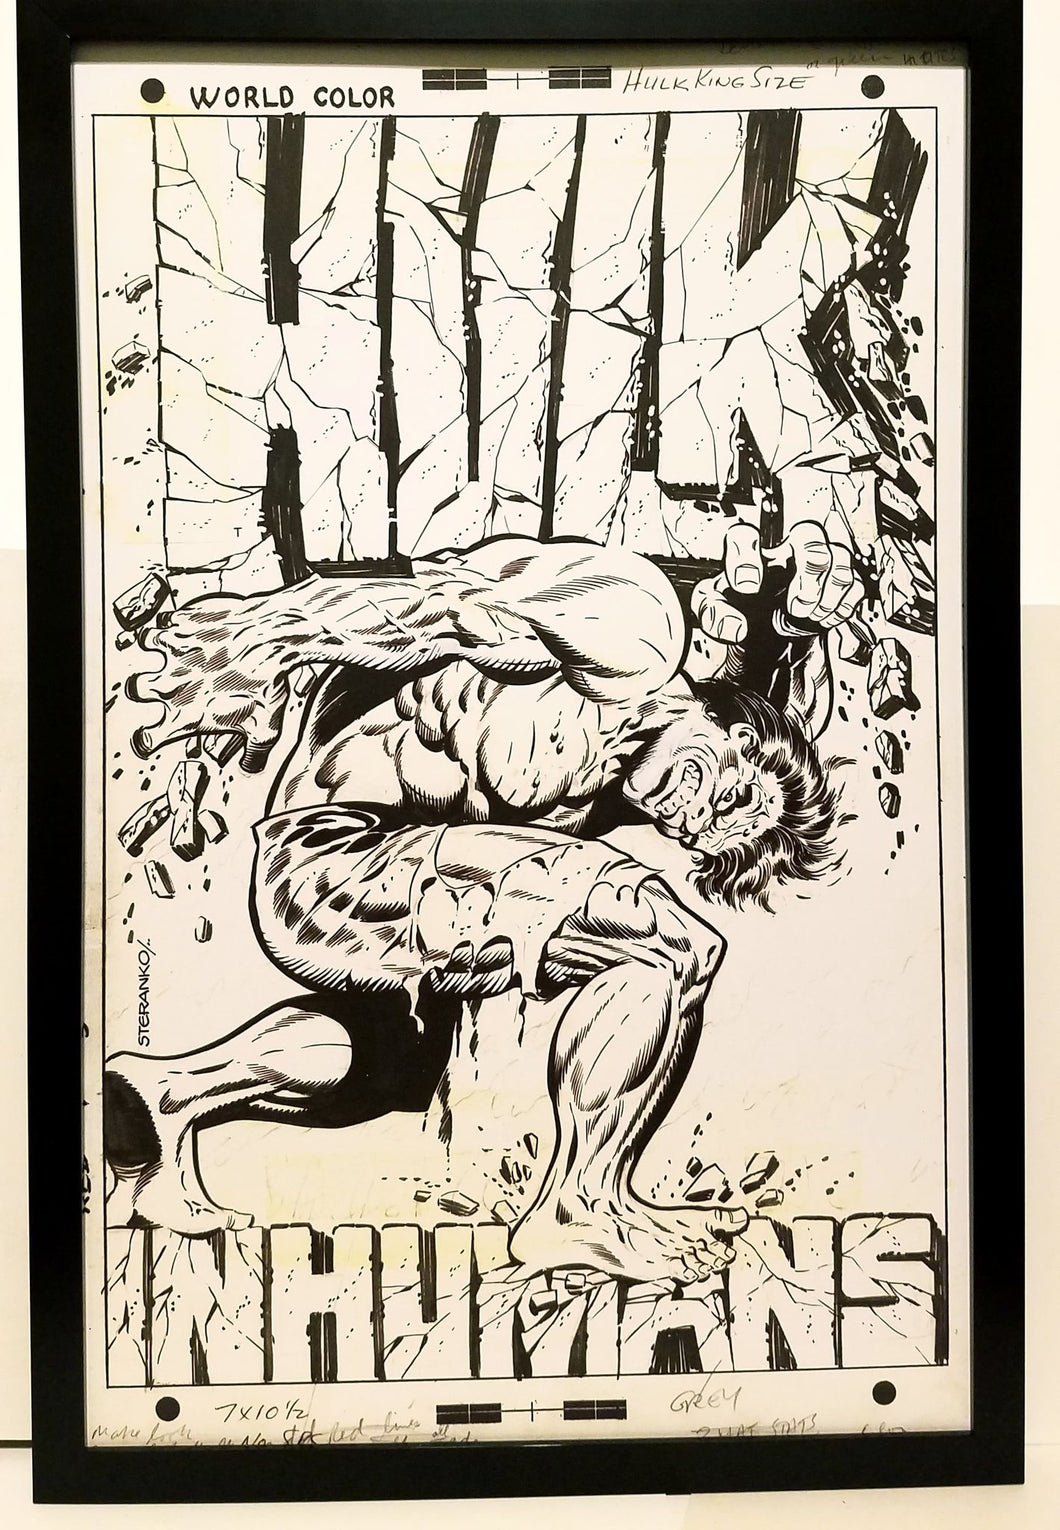 Incredible Hulk Special #1 by Jim Steranko 11x17 FRAMED Original Art Poster Marvel Comics